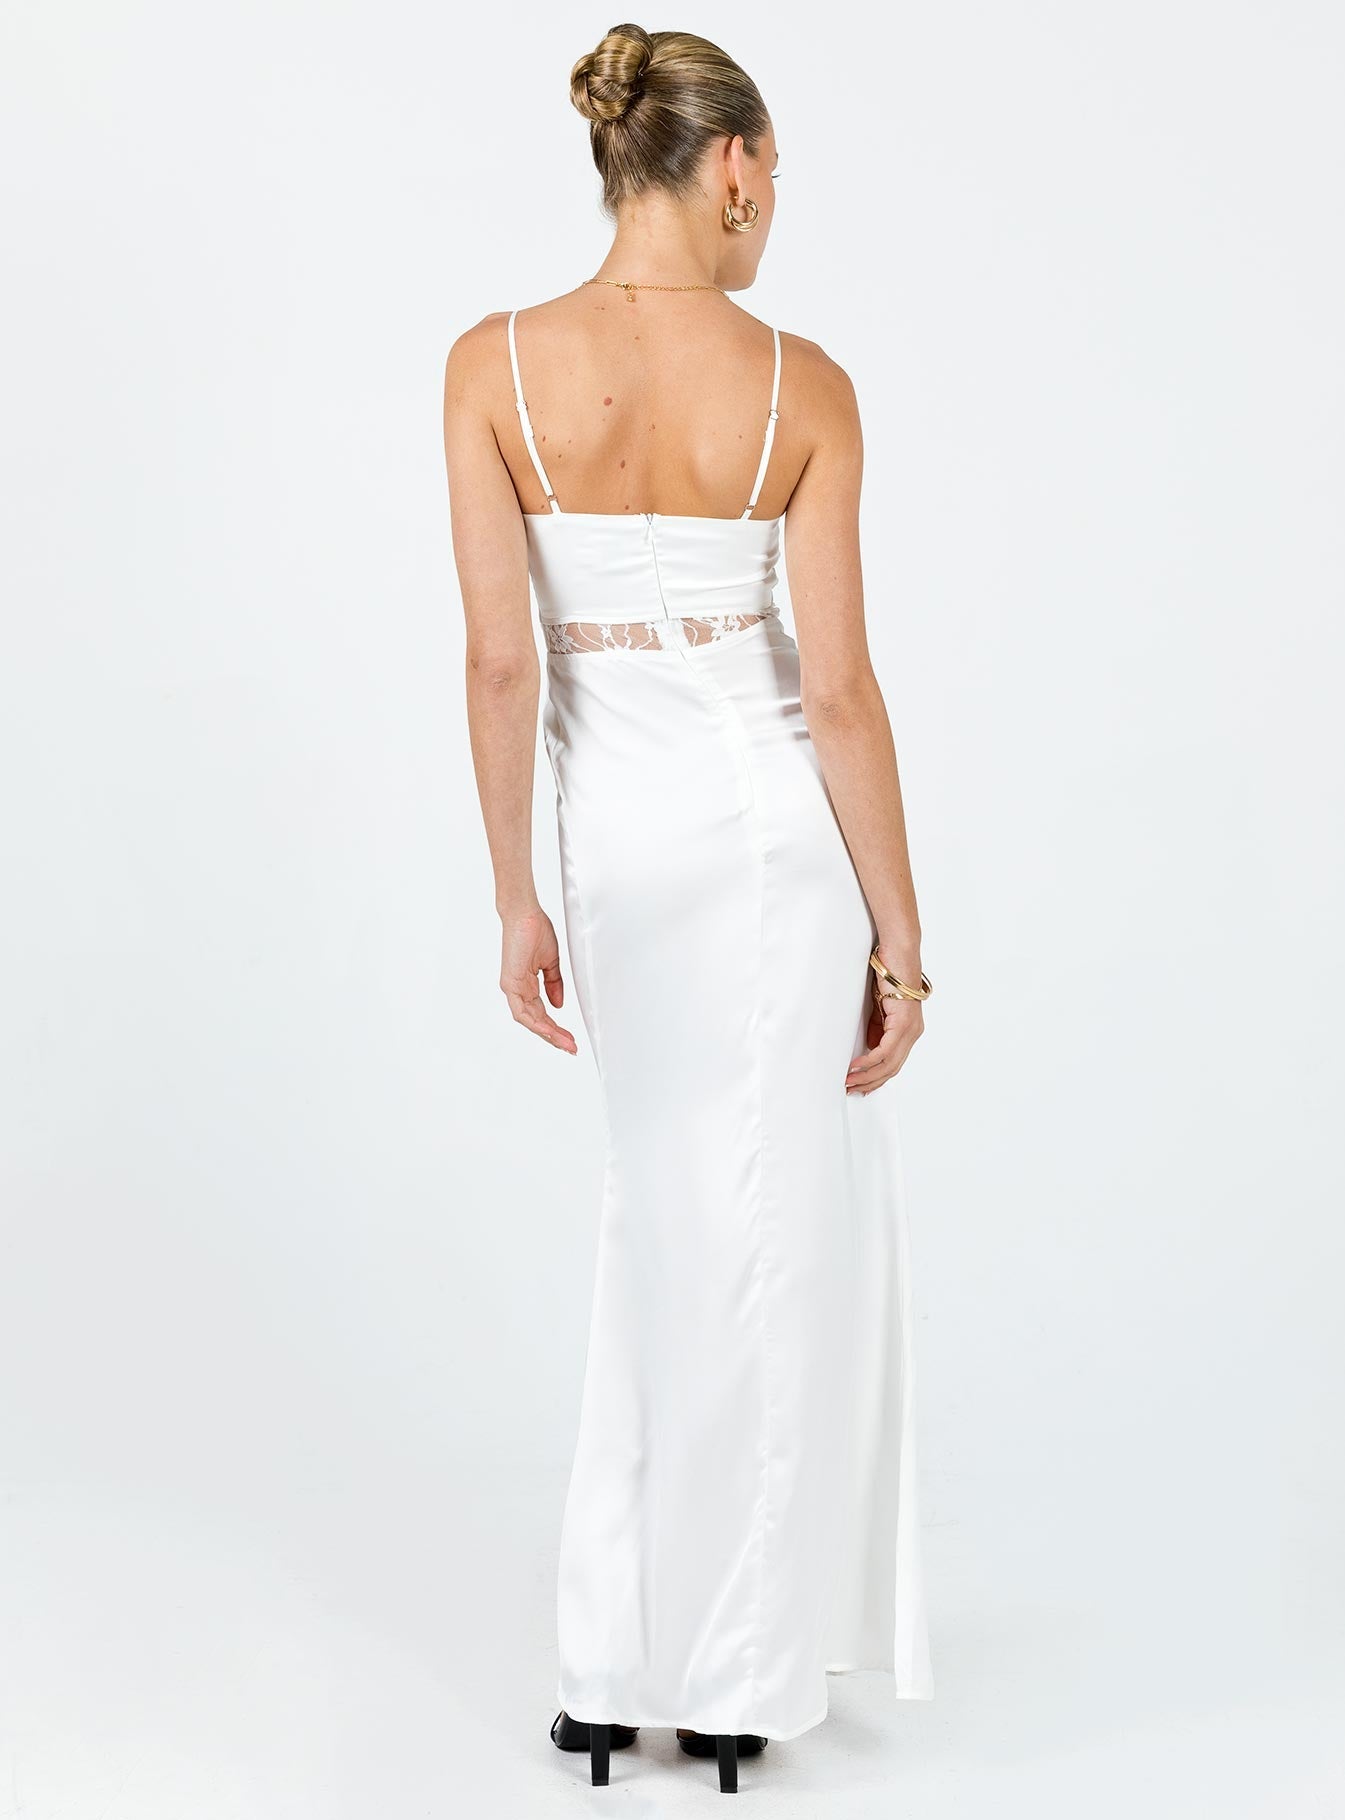 Shop Formal Dress - Roselle Maxi Dress White third image